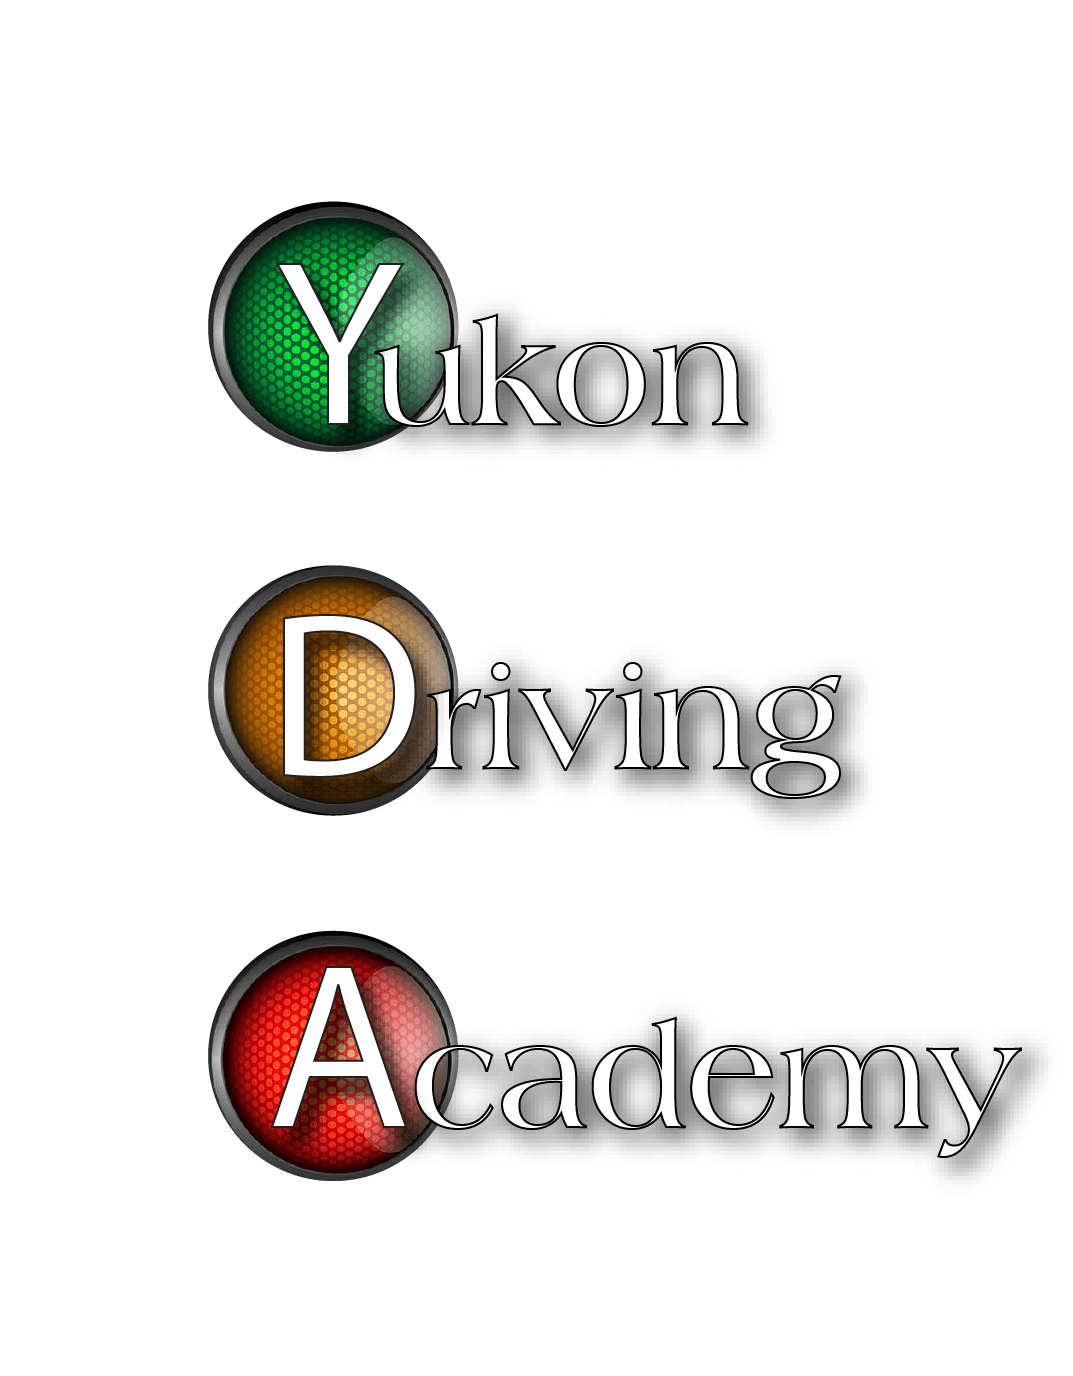 Yukon Driving Academy logo.